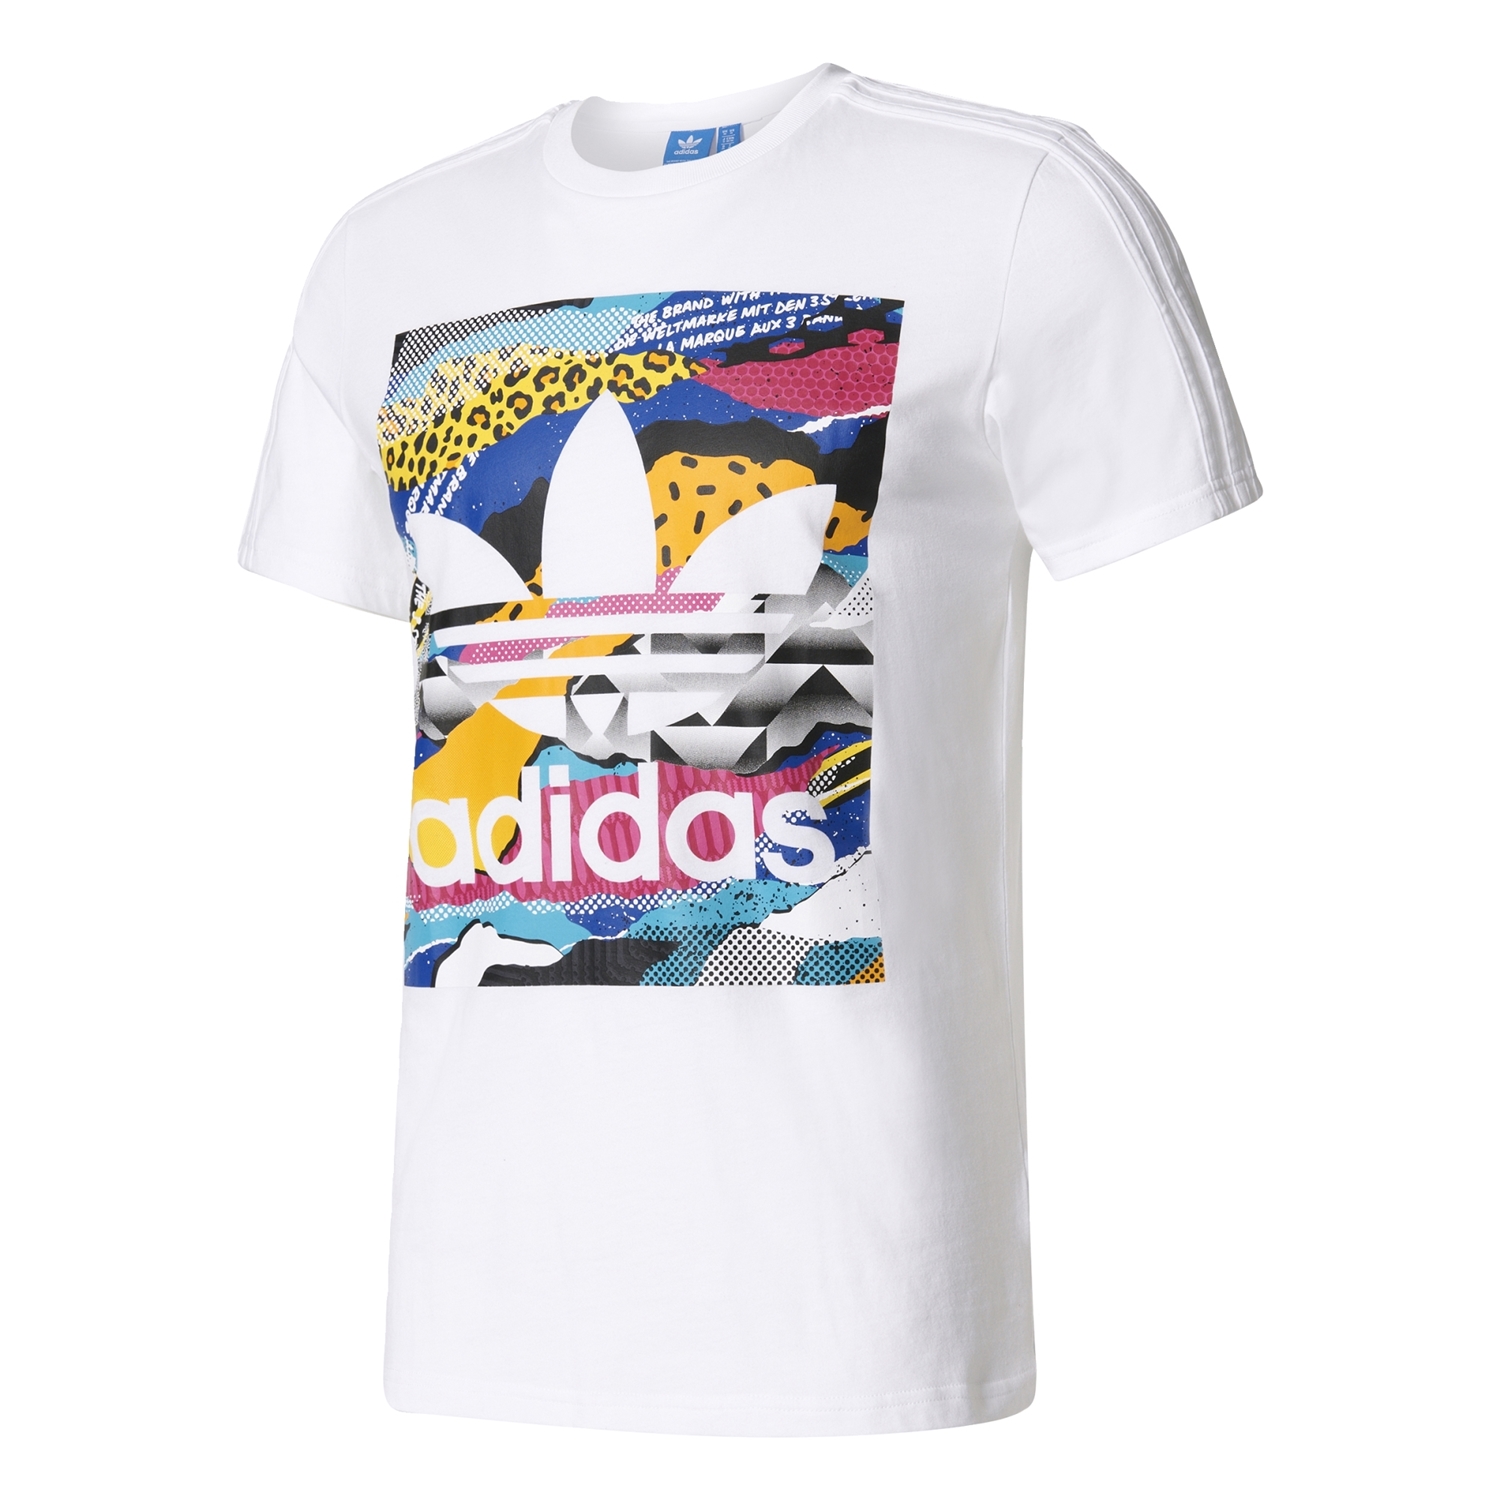 Fiordo nieve ballena Adidas Originals L.A Box Graphic Trefoil Tee (white/multicolor)